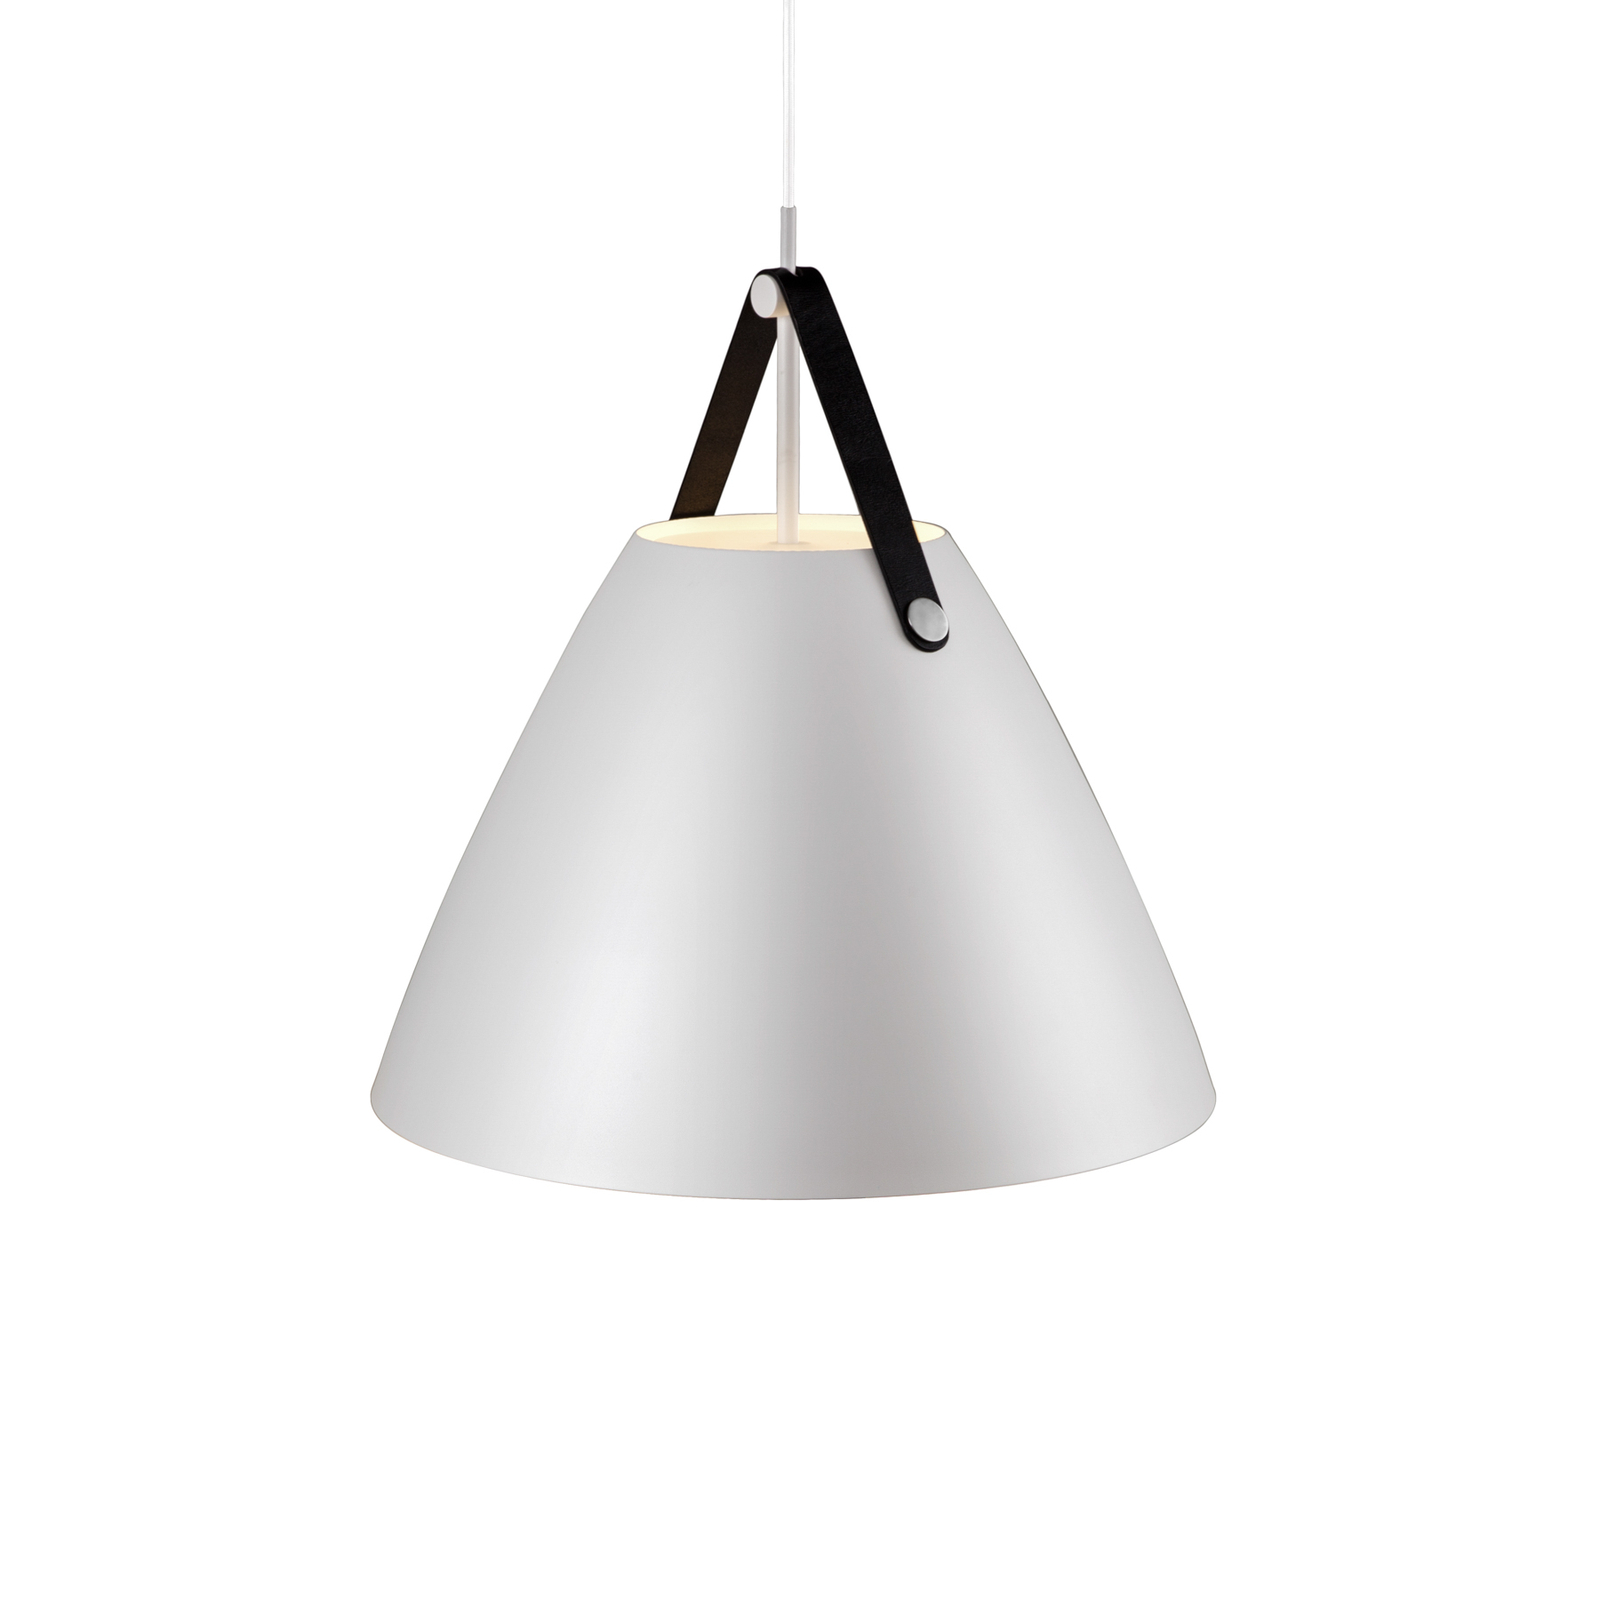 Pendant light Strap, metal shade, Ø 48cm, white